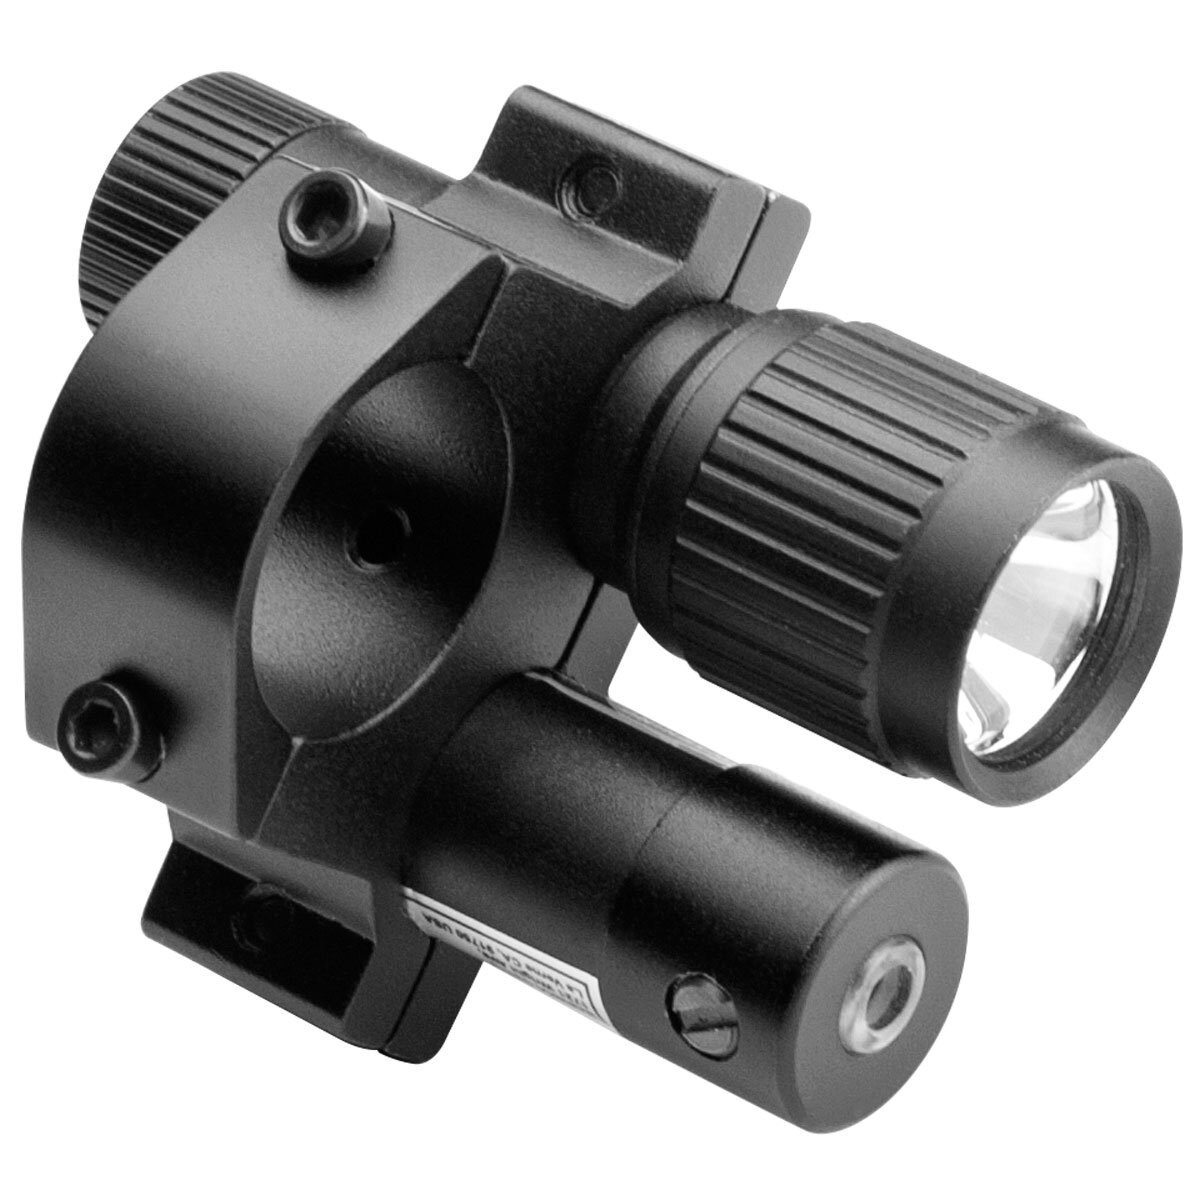 Buy Barska Tactical Red Laser Sight W Flashlight And Mount Online